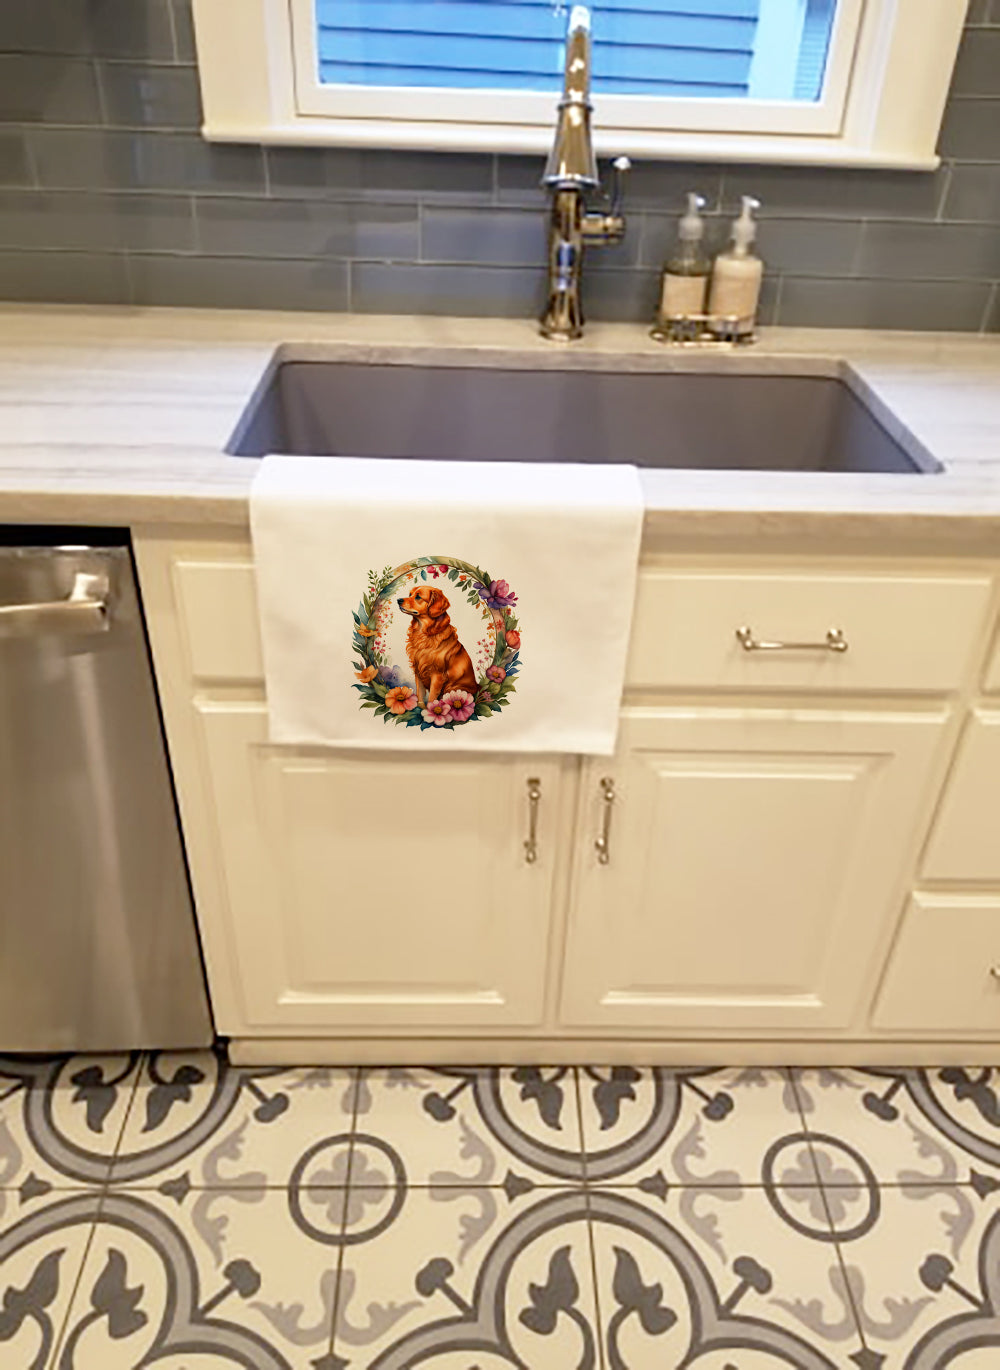 Nova Scotia Duck Tolling Retriever and Flowers Kitchen Towel Set of 2